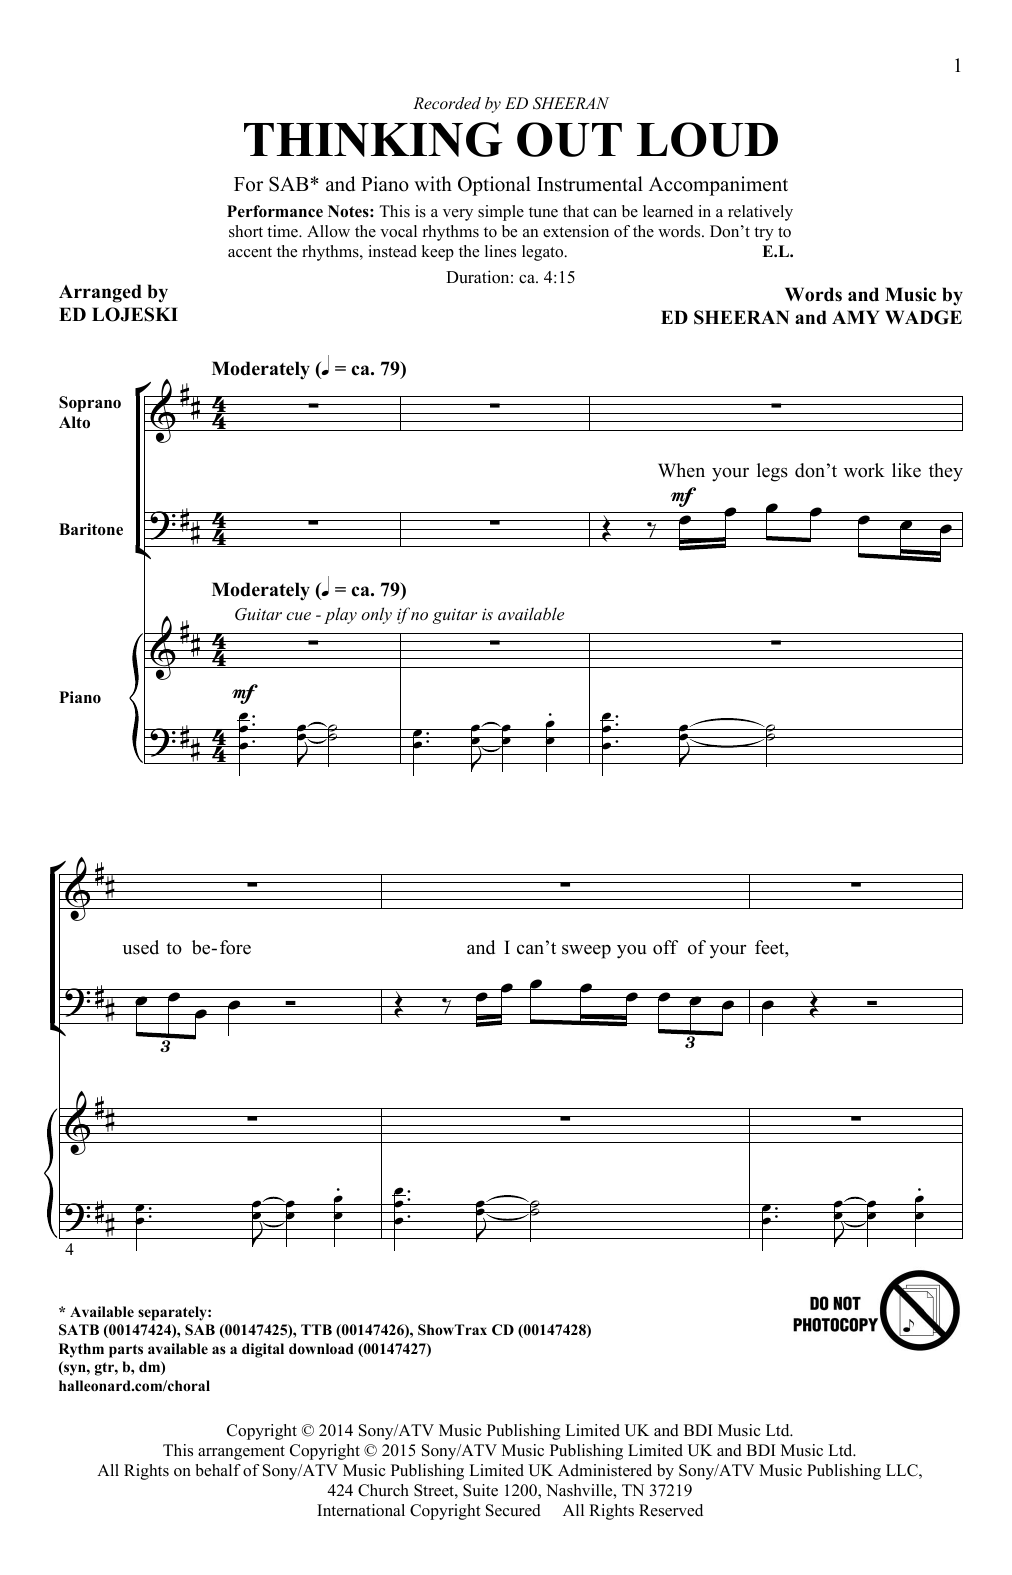 Ed Sheeran Thinking Out Loud (arr. Ed Lojeski) Sheet Music Notes & Chords for SAB - Download or Print PDF